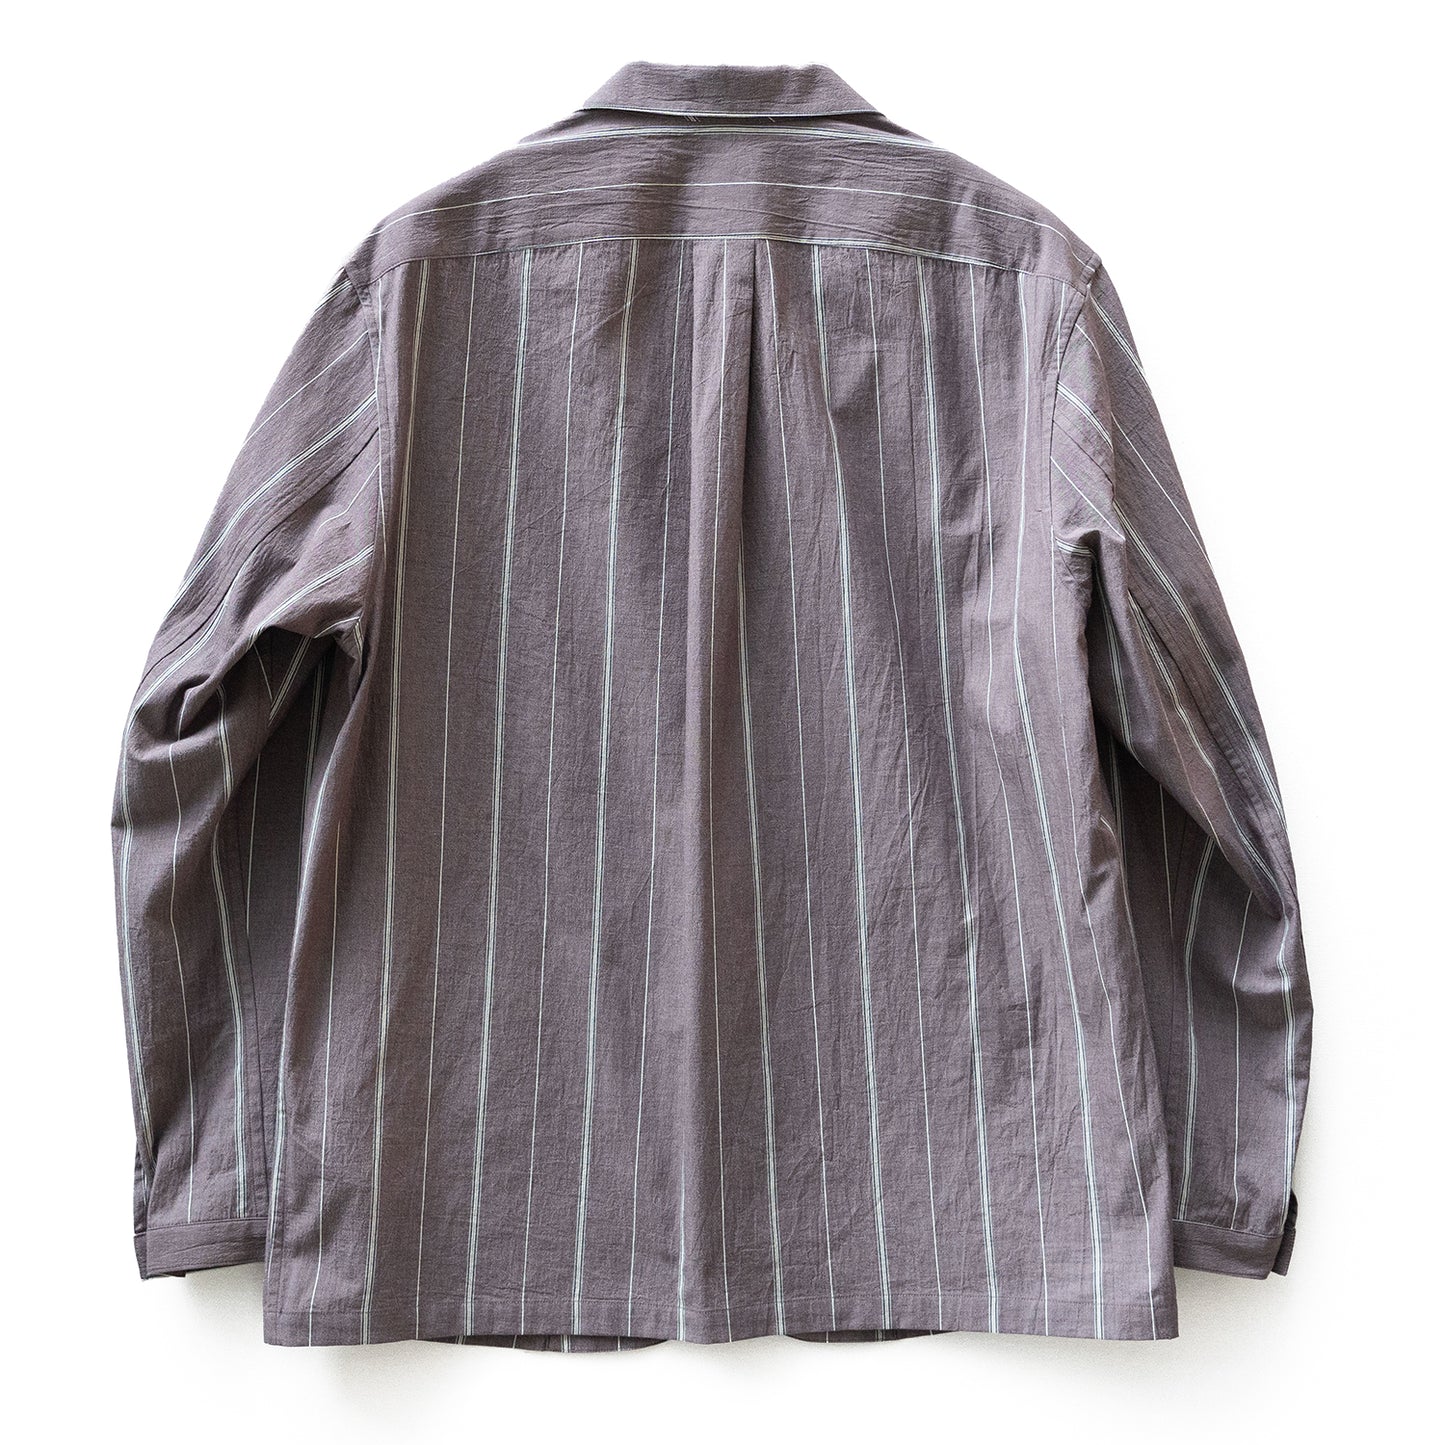 COLONY CLOTHING /  コットンストライプ シャツジャケット / CC2301-JK01S-1